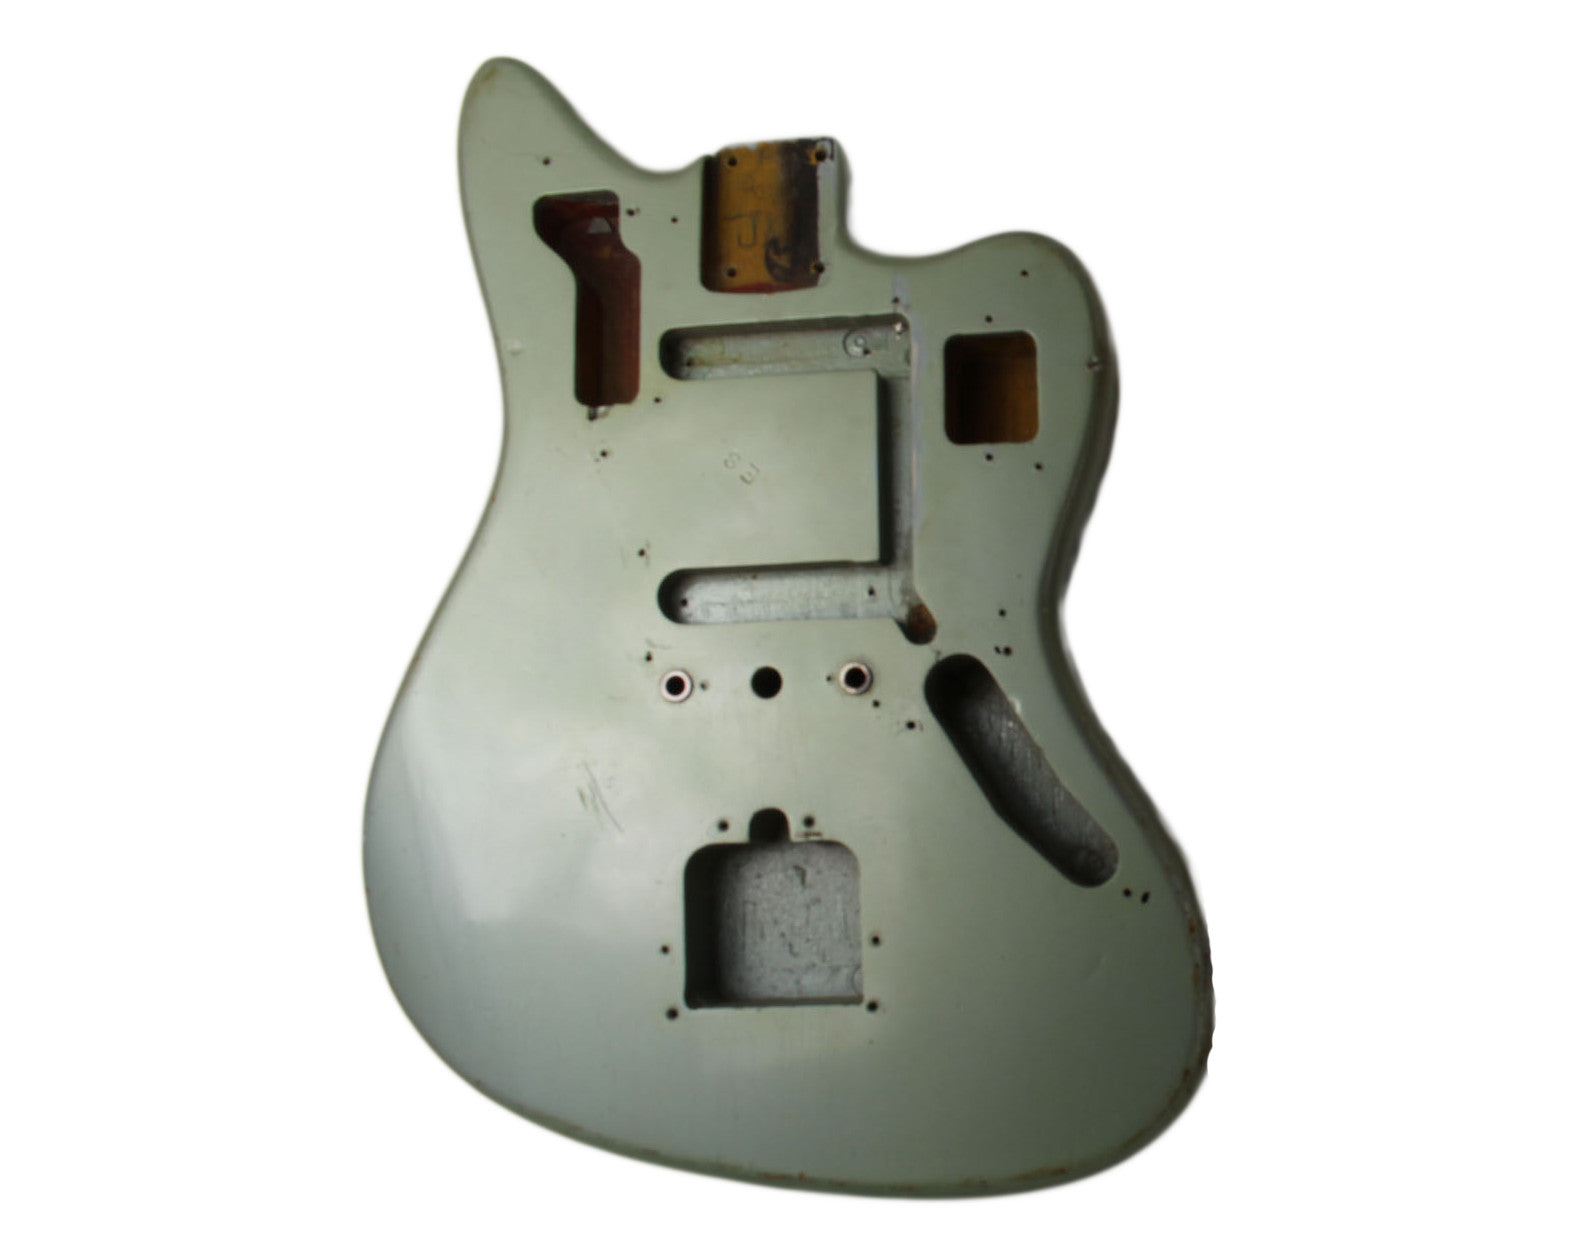 Vintage correct Jaguar guitar body